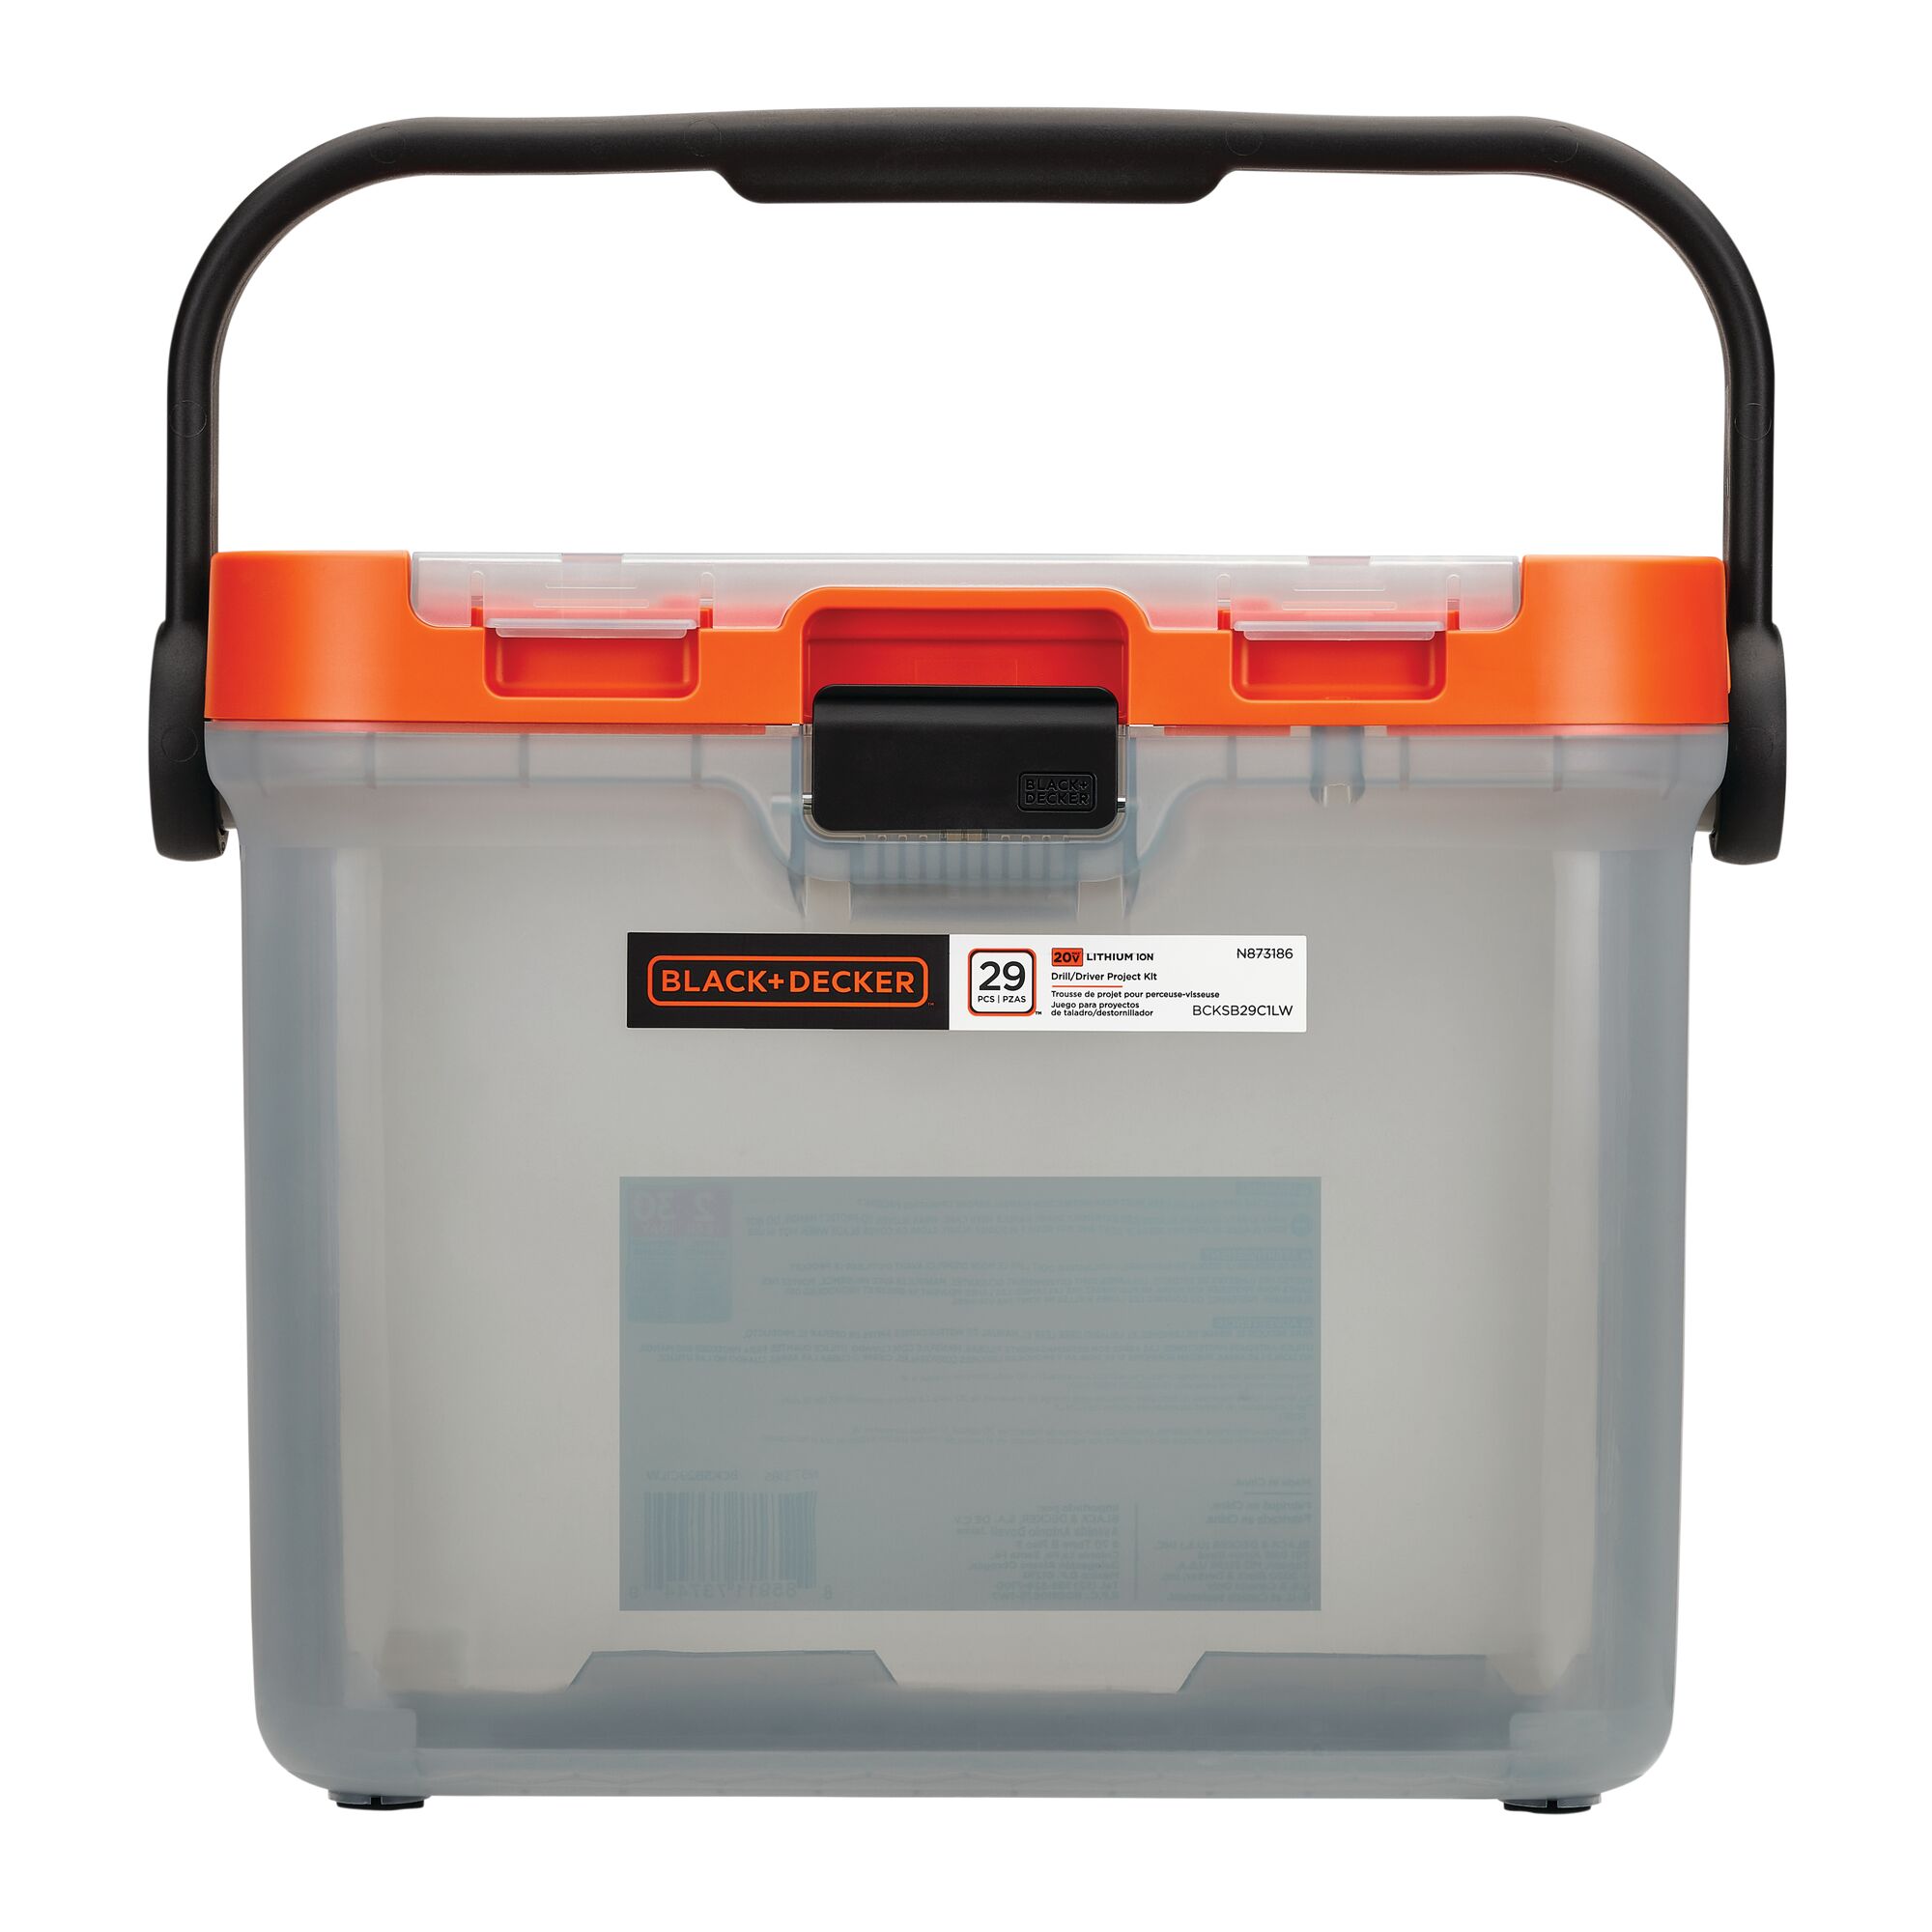 Translucent drill kit tool box